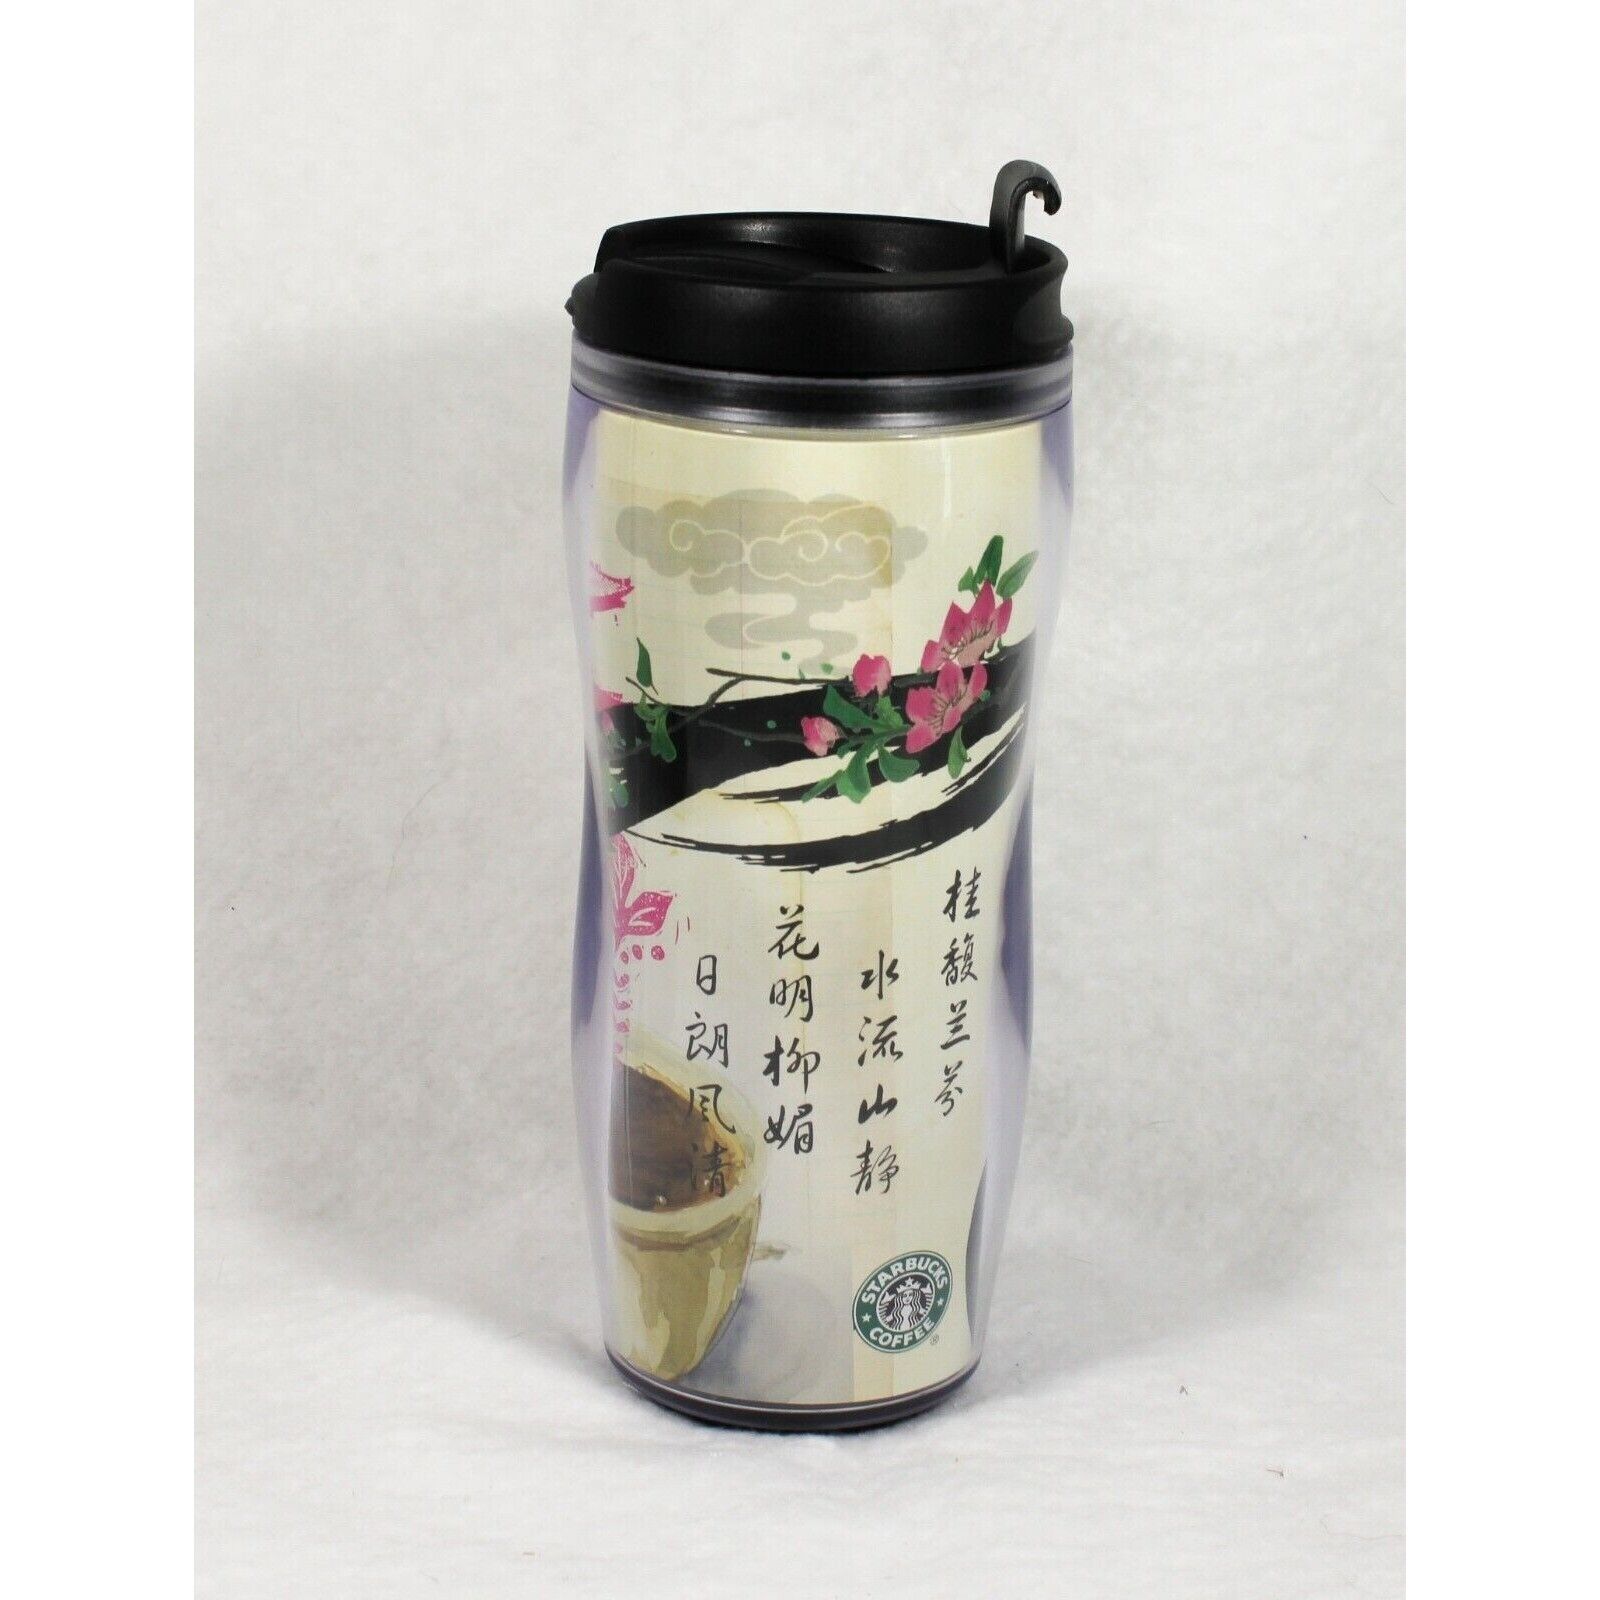 Starbucks 2005 travel mug from Shanghai - International Collectable